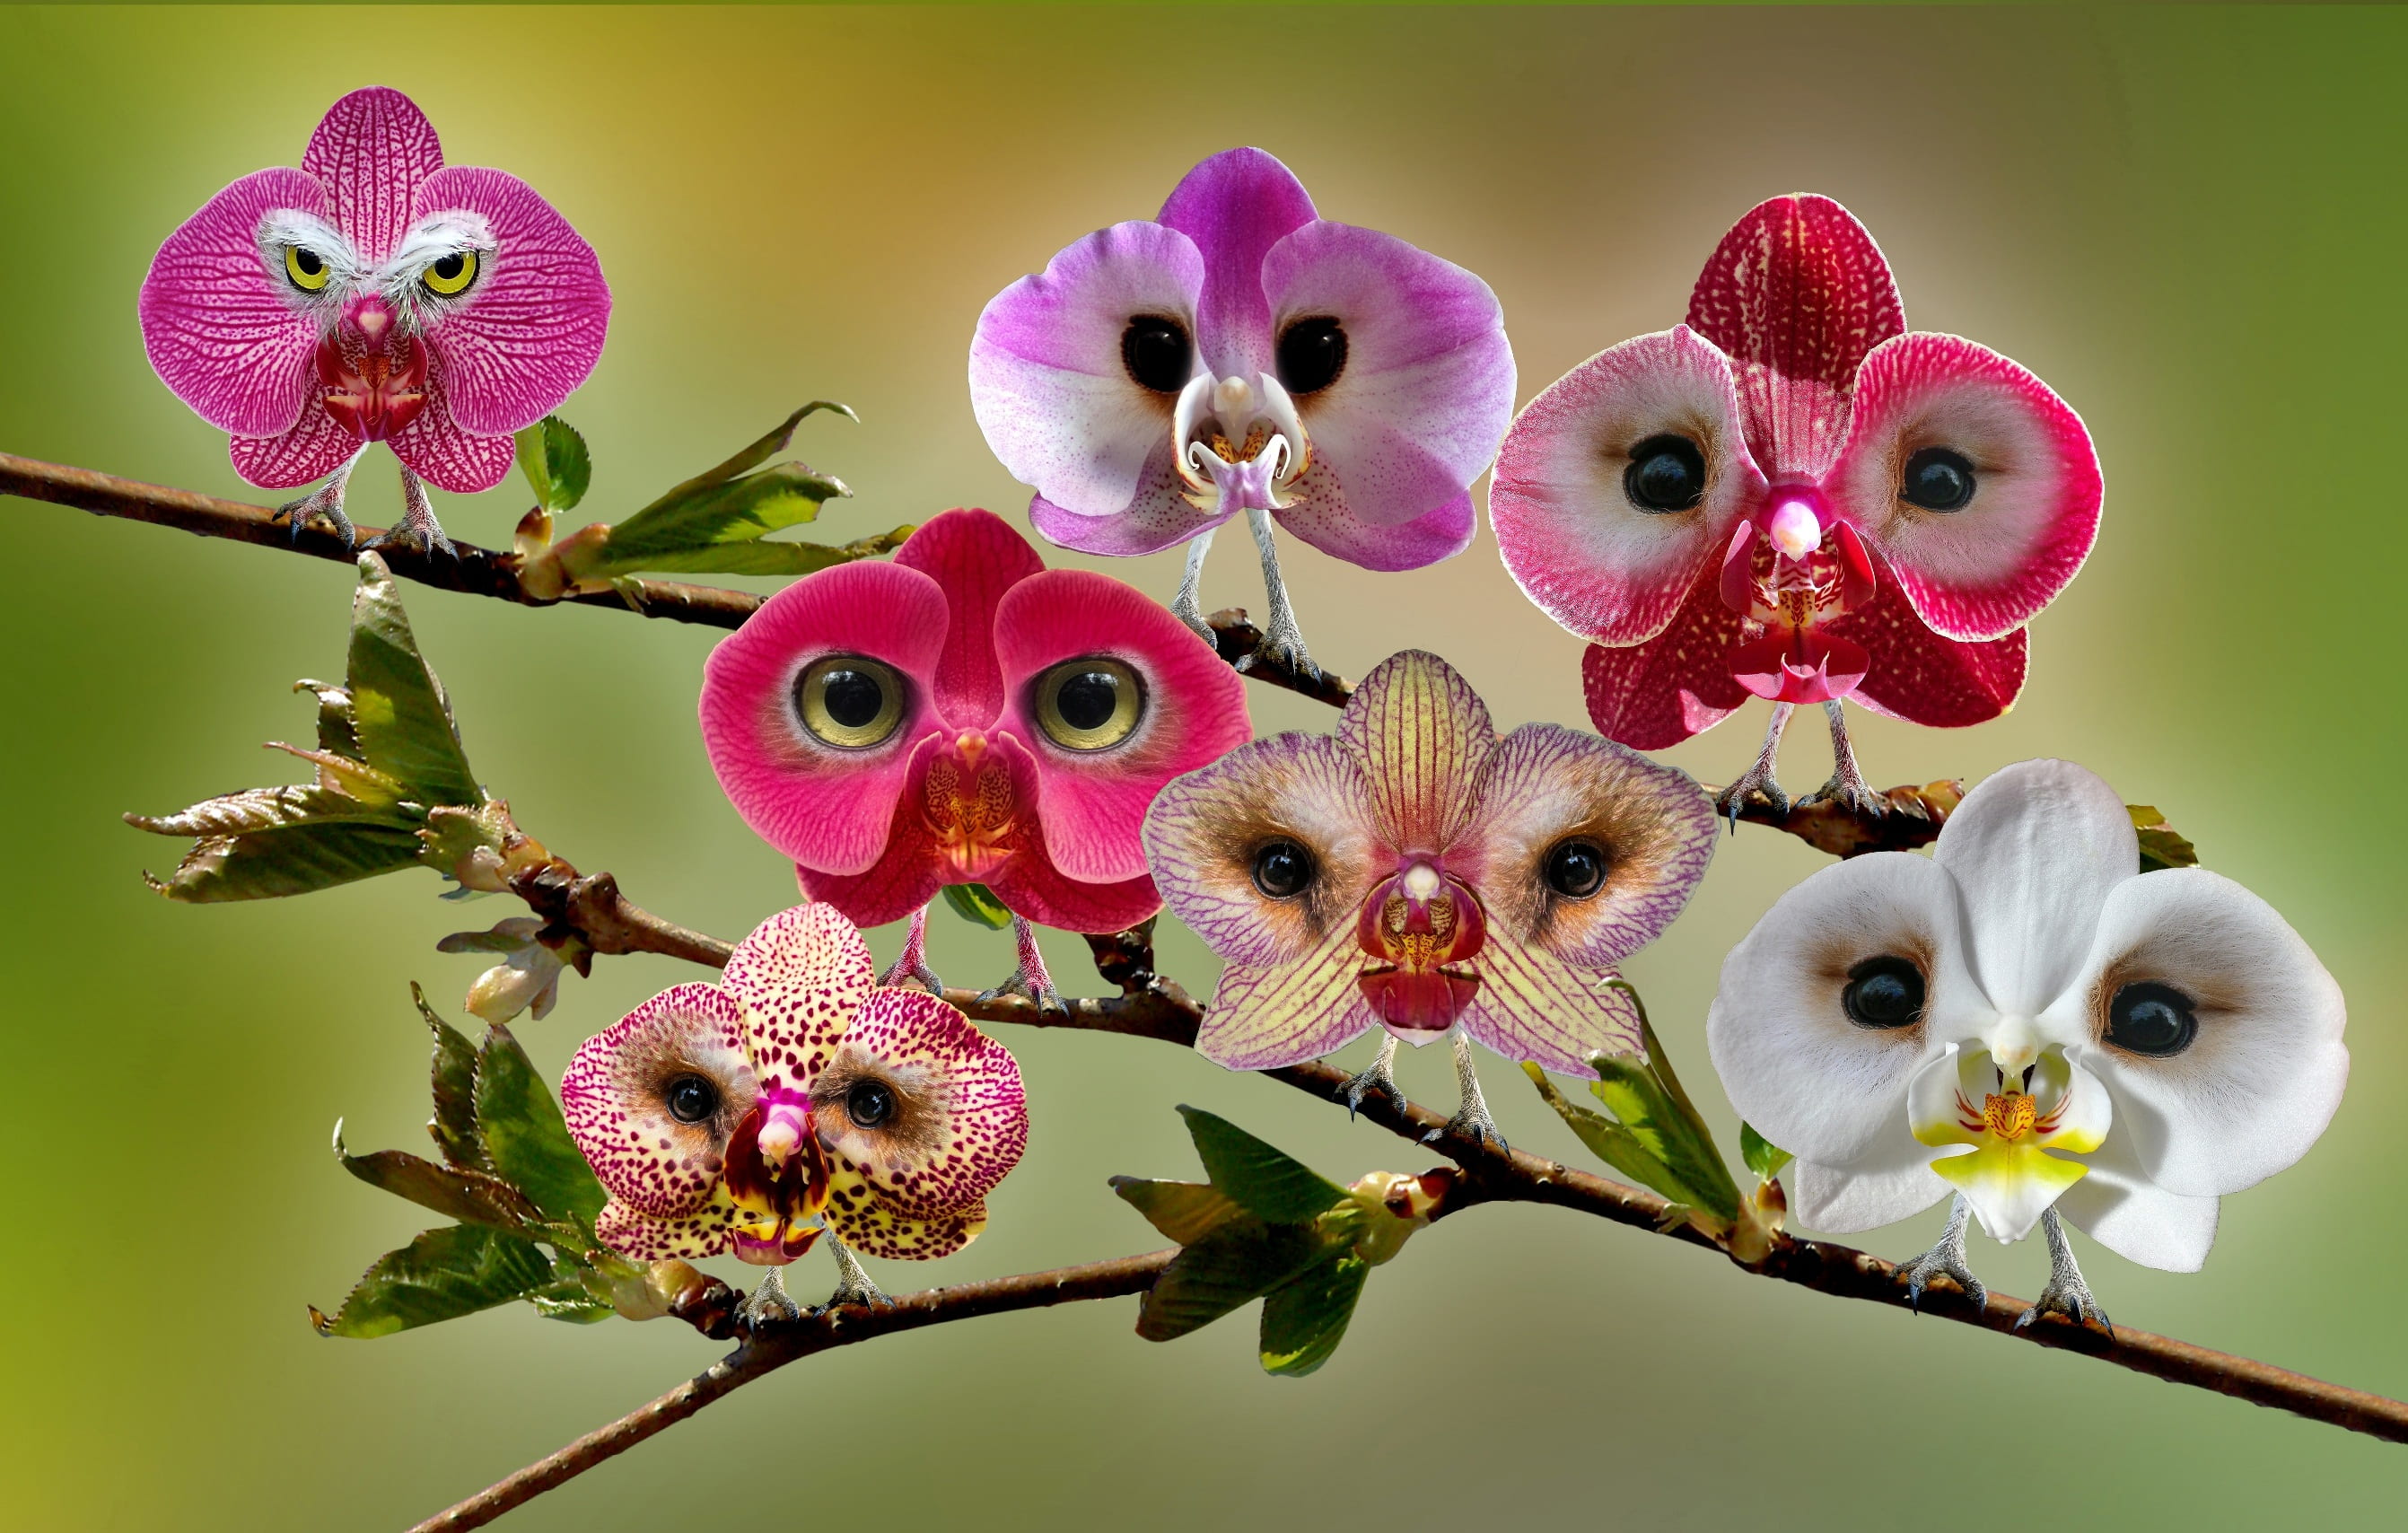 assorted-color flowers illustration, digiart, photoshop art, digital art